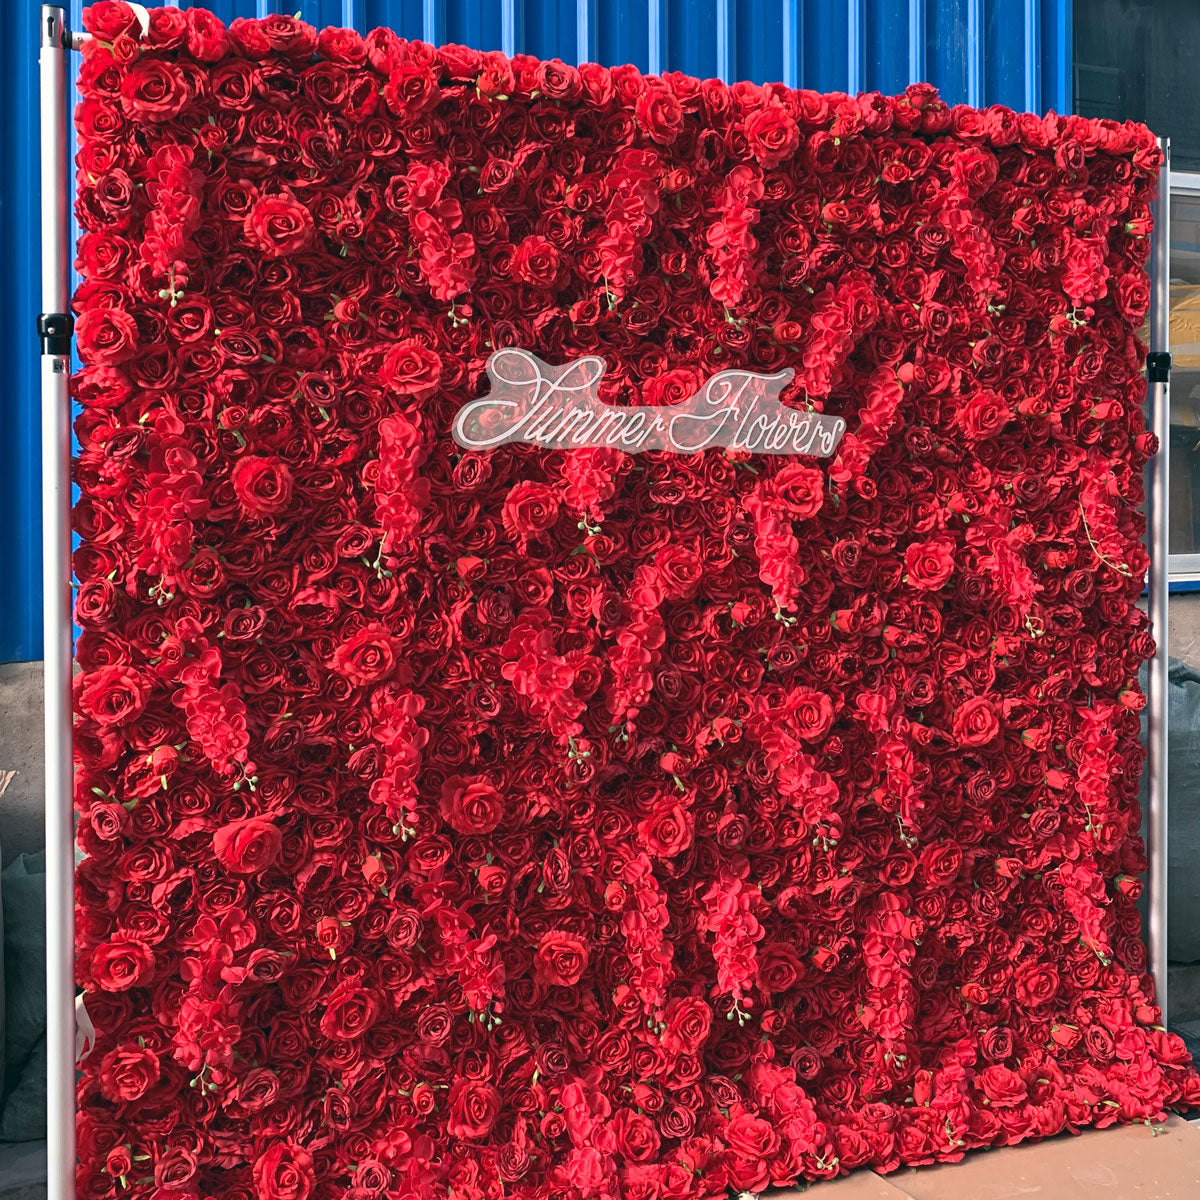 Summer Flower:CB-050 8ft*8ft Cloth Back Artificial Flower Wall Backdrop